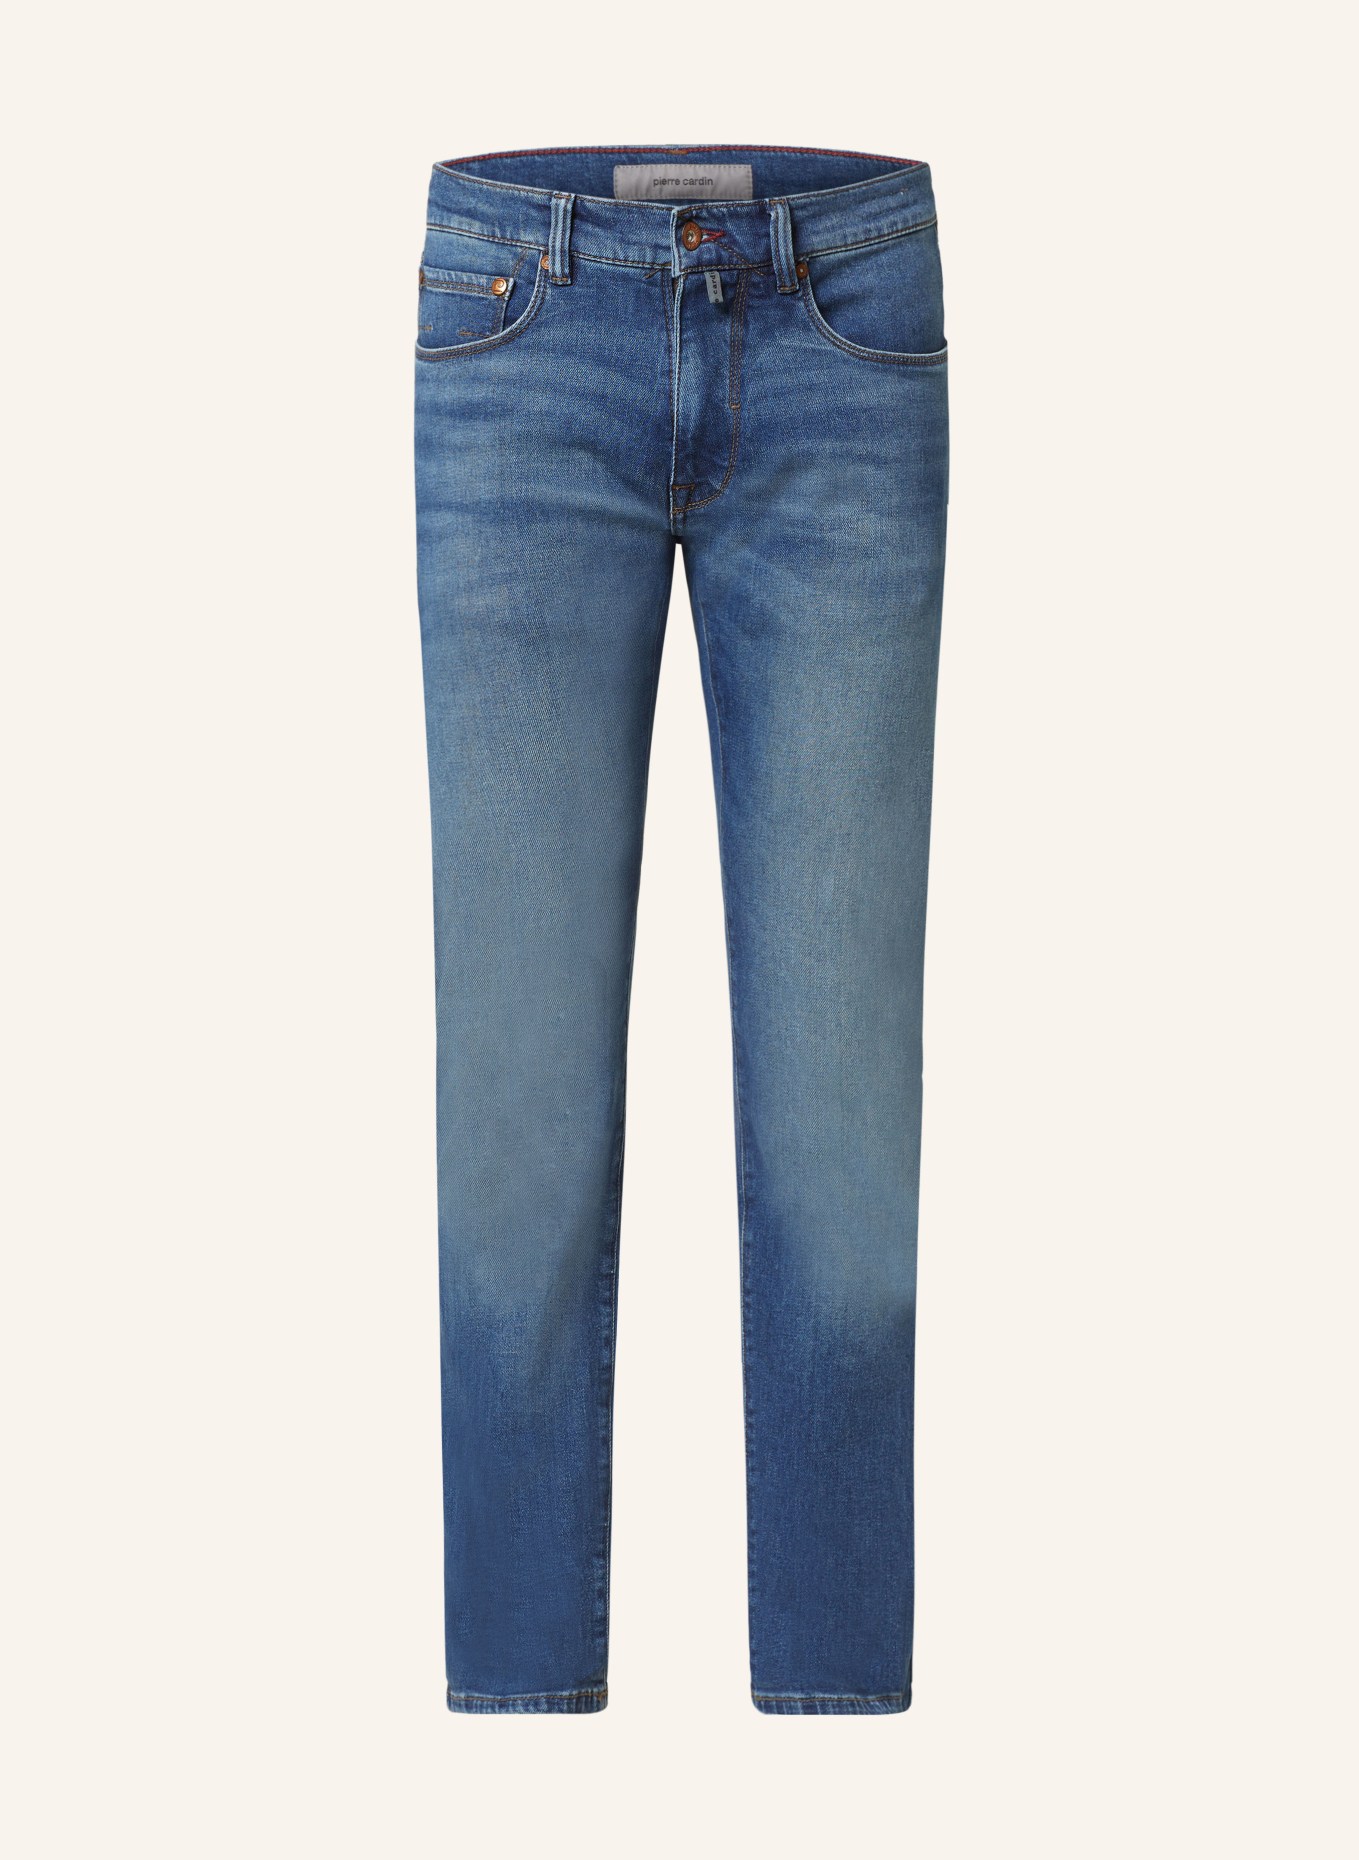 pierre cardin Jeans LYON Tapered Fit, Farbe: 6827 blue fashion (Bild 1)